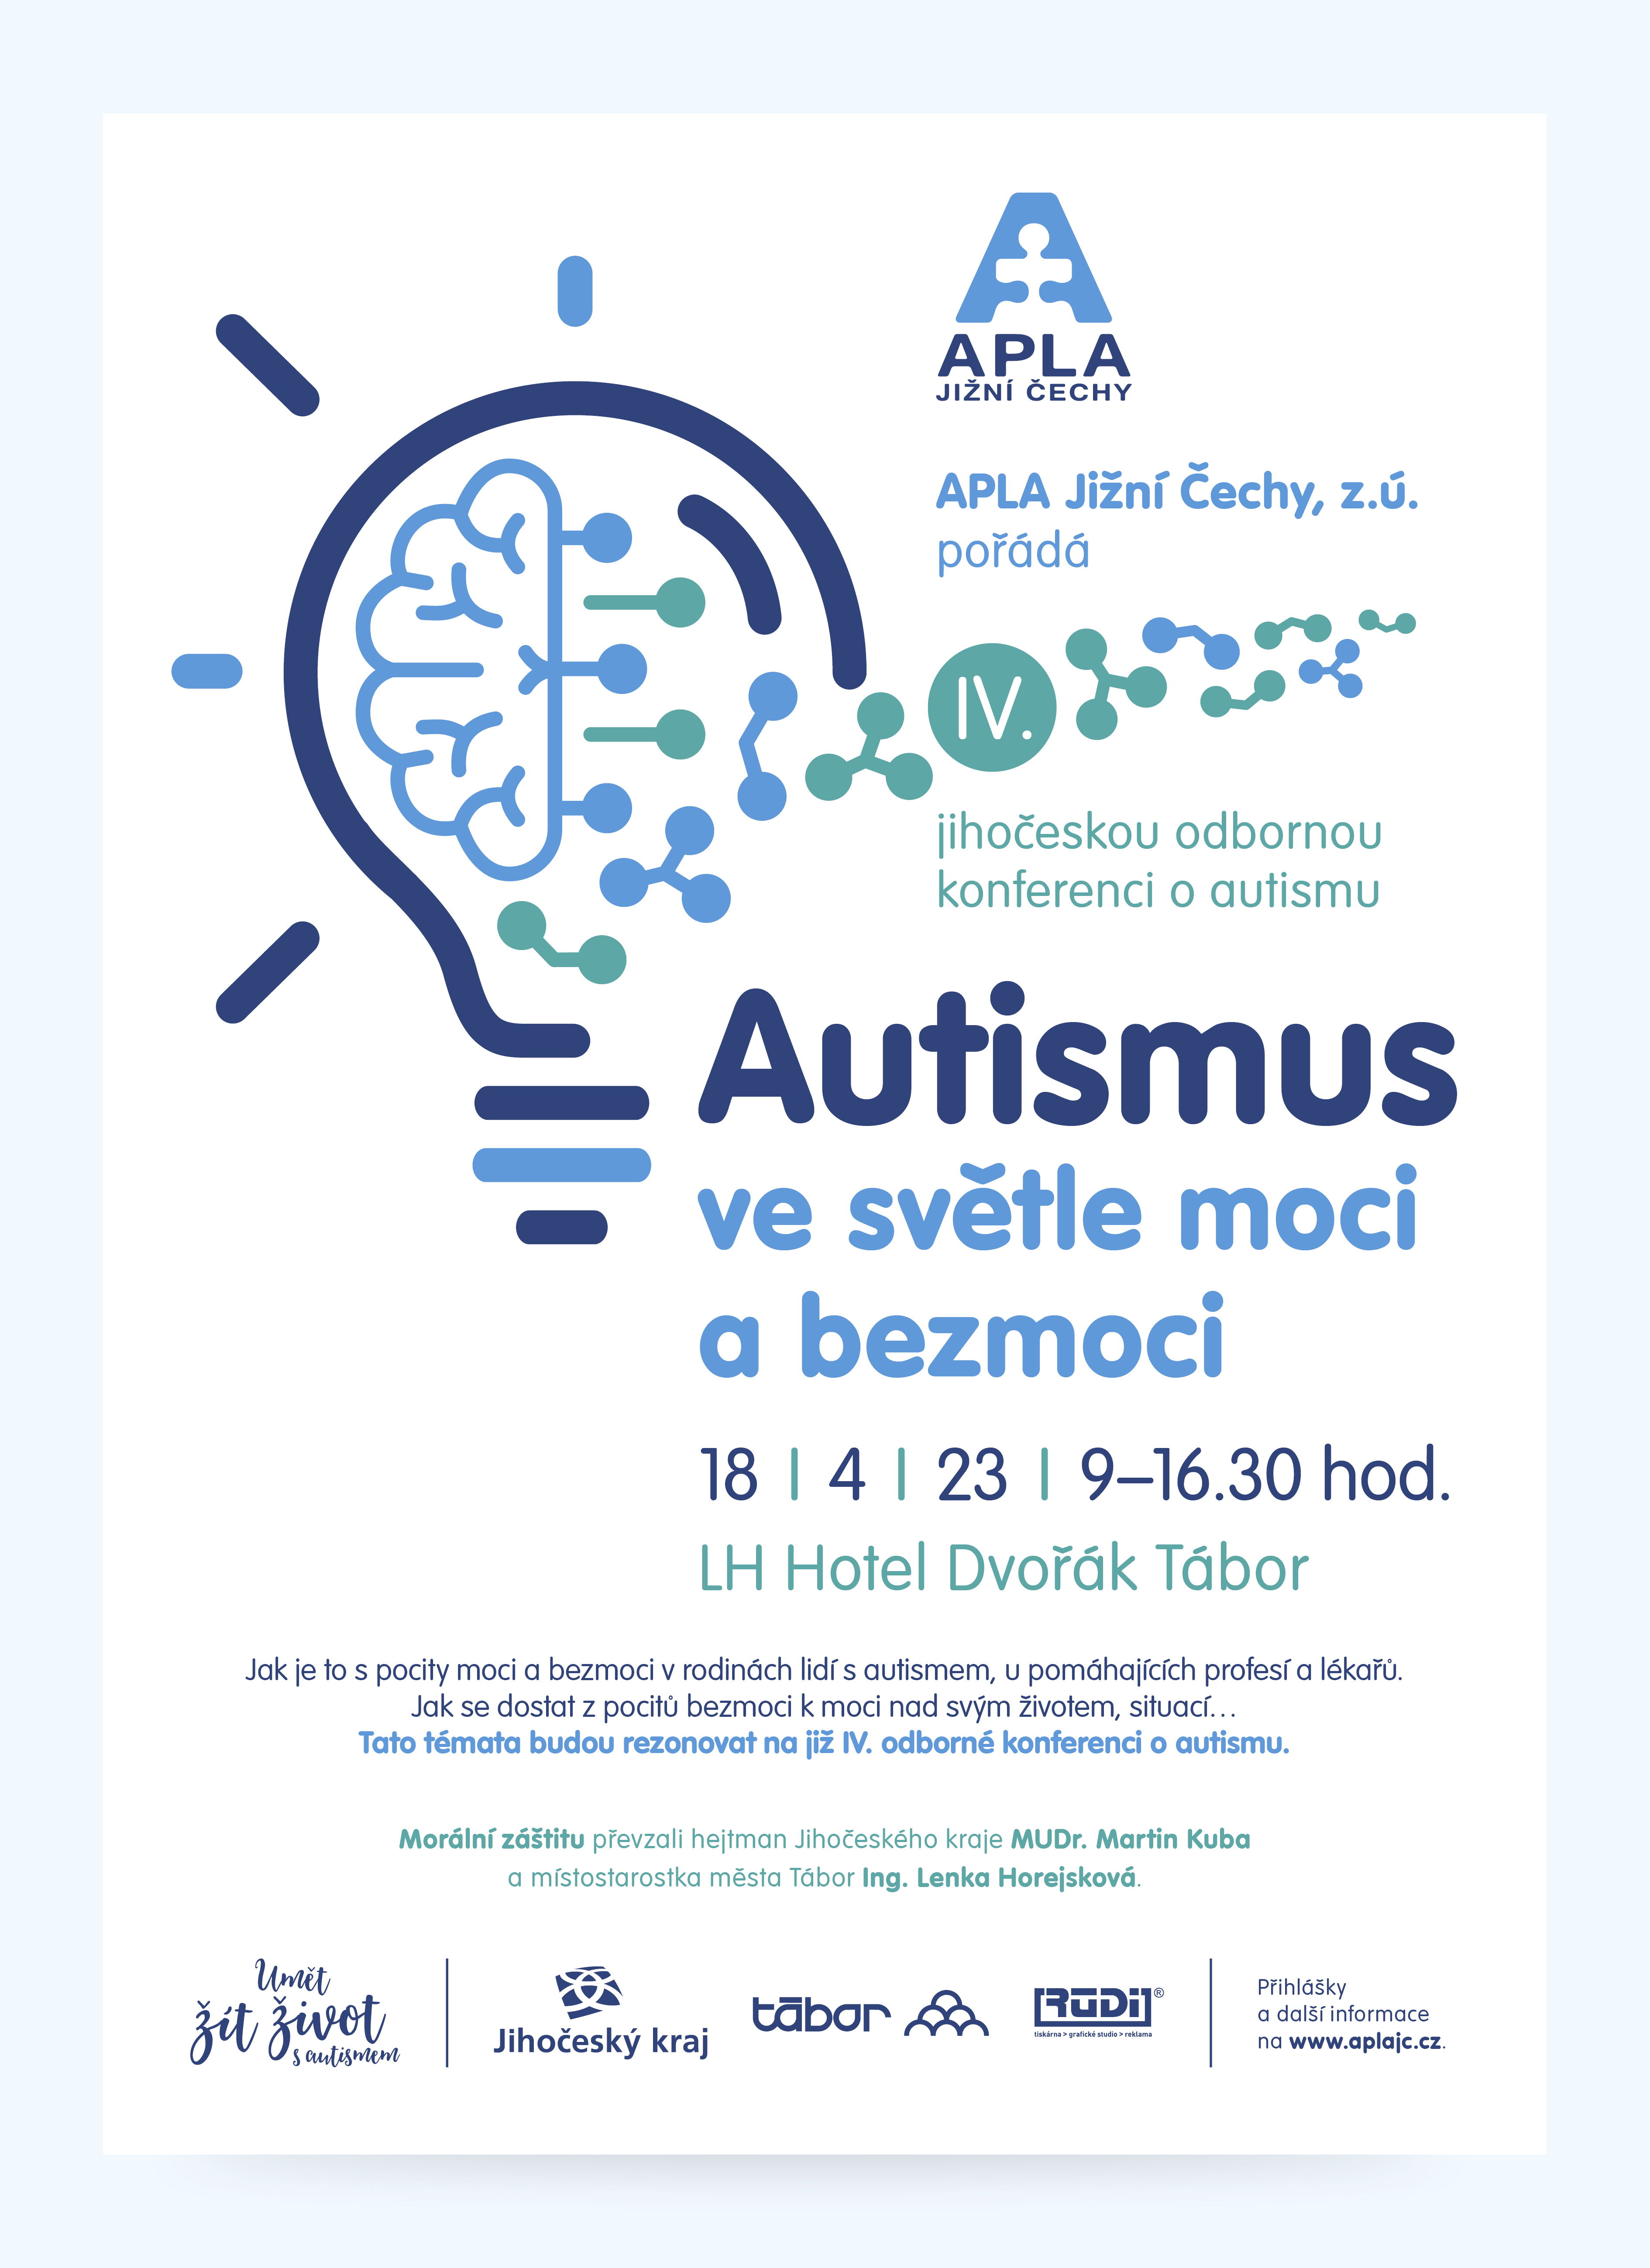 https://www.apsscr.cz/media/aktuality/fotogalerie/a4-autismus-ve-svetle-moci-a-bezmoci-konference-20232.jpg